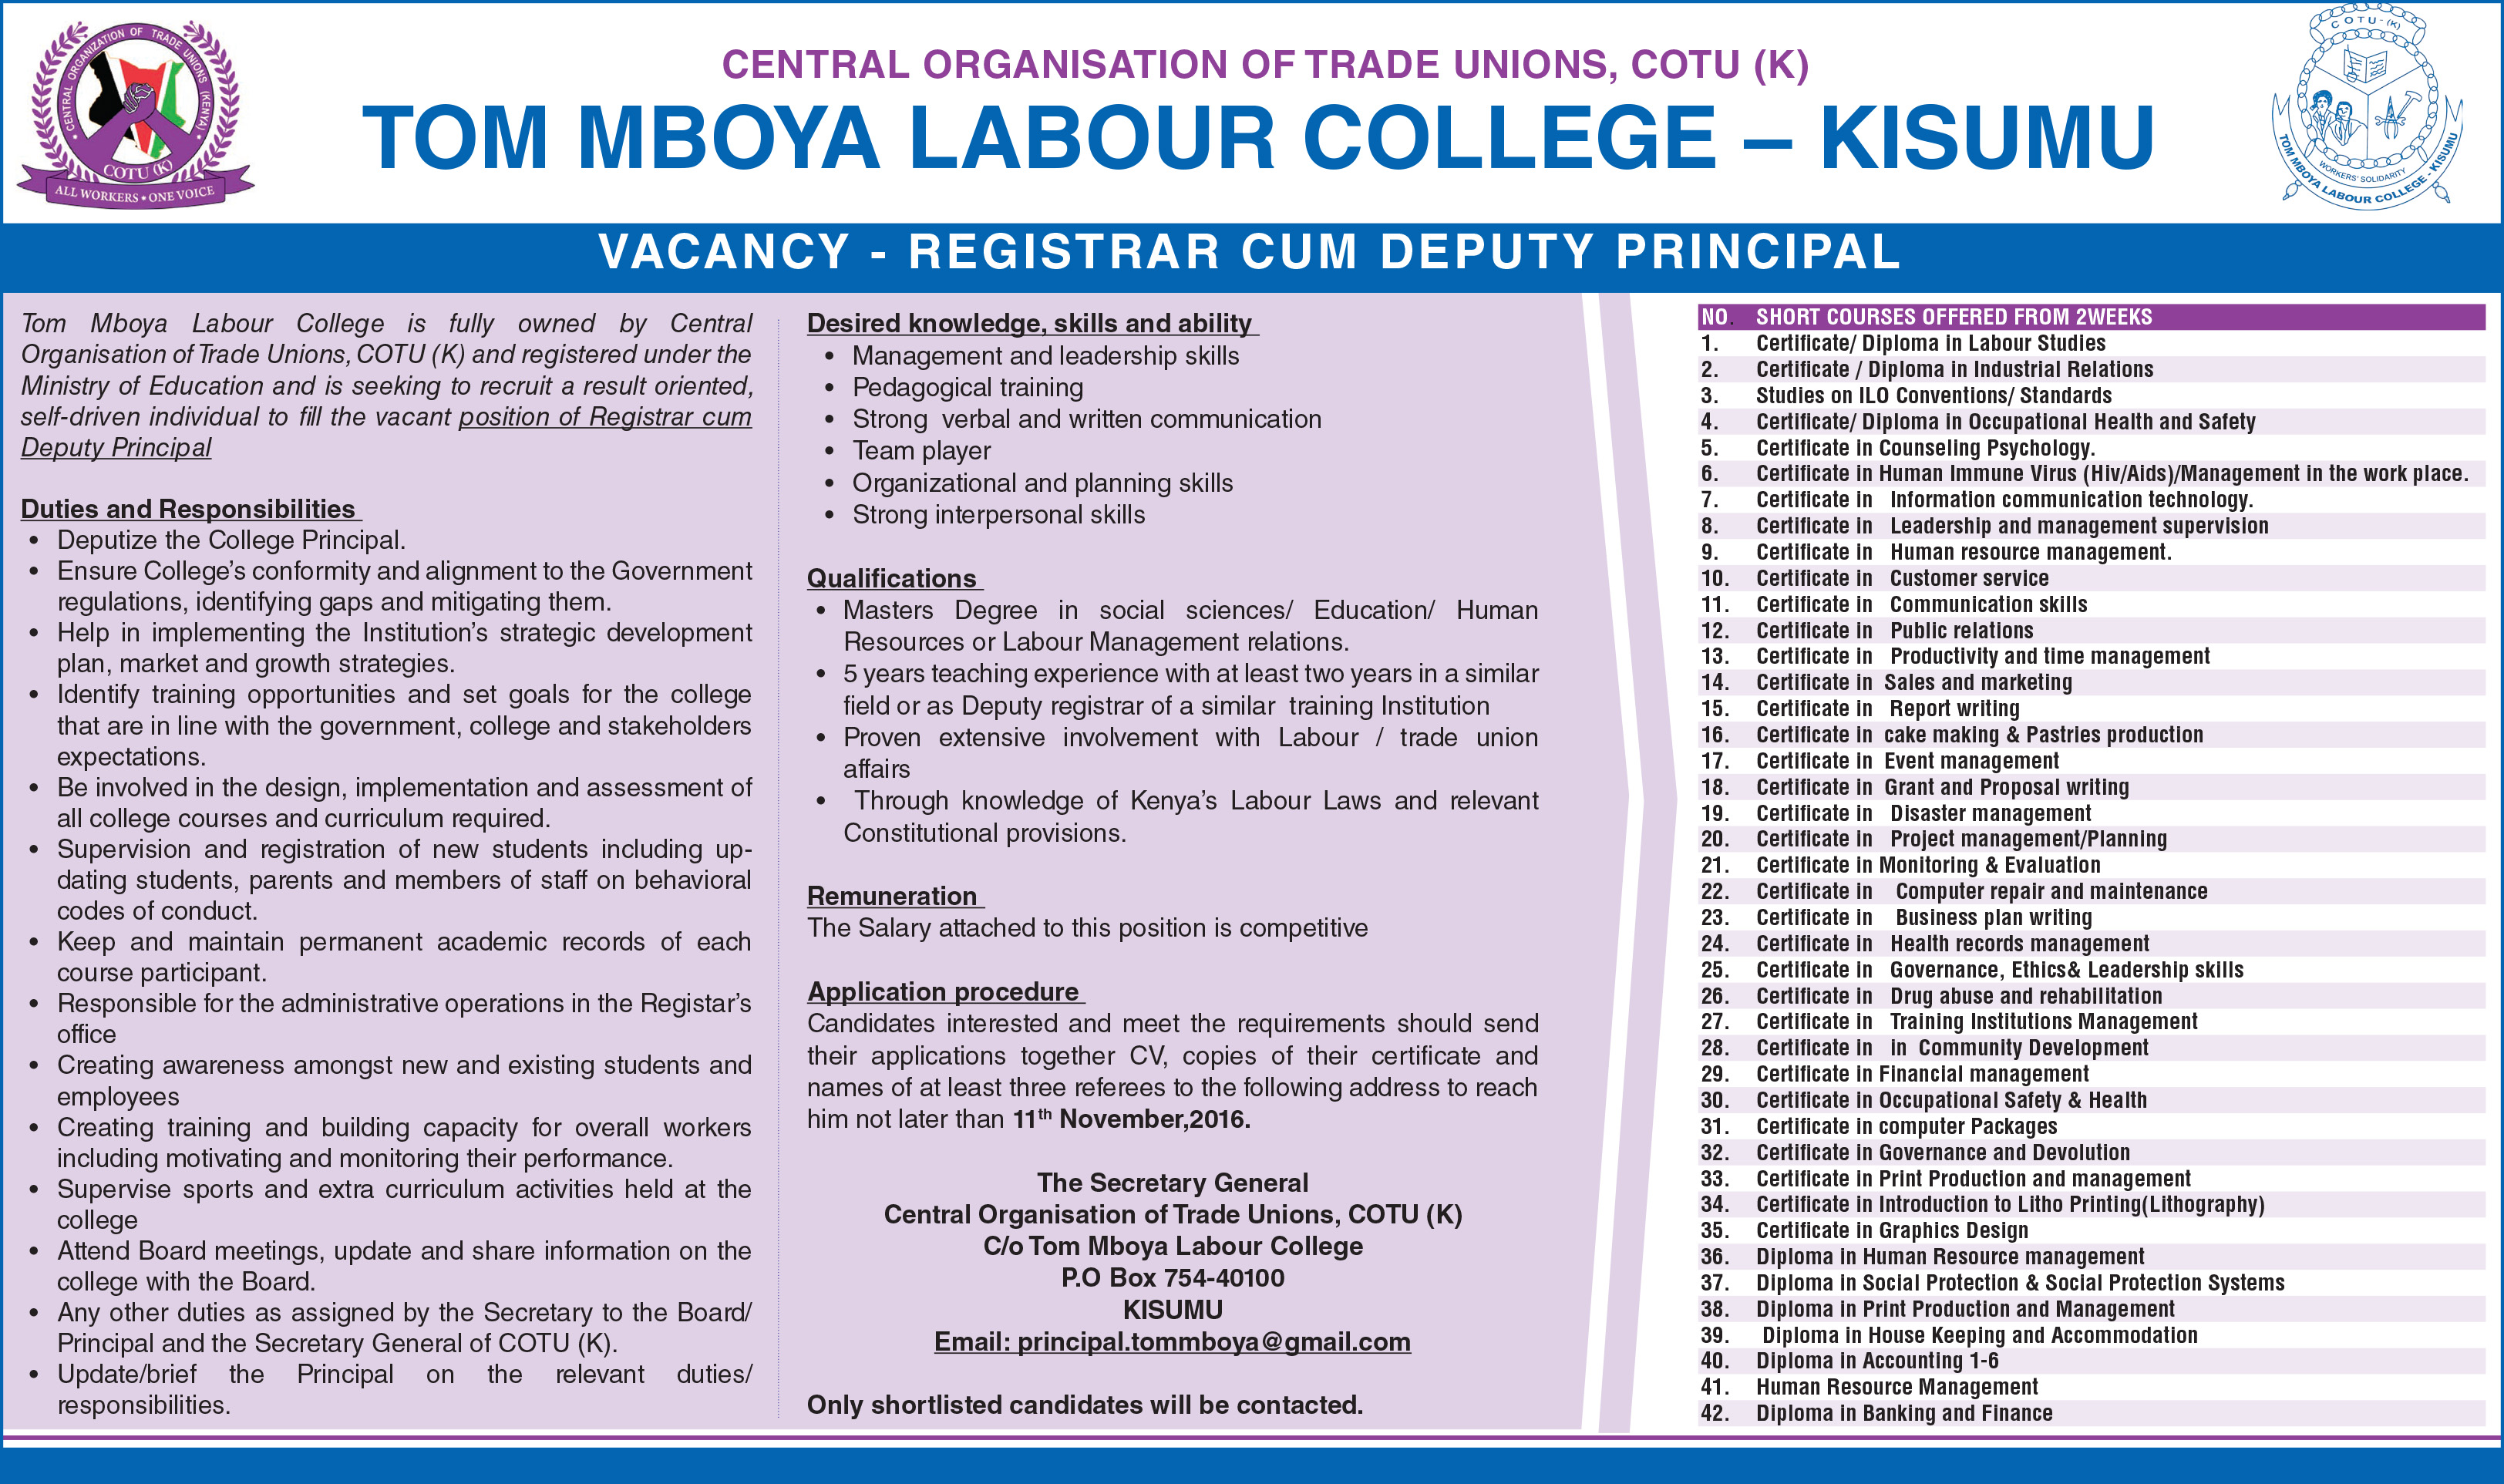 Vacancy Registrar cum Deputy Principal Tom Mboya Labour College – Kisumu